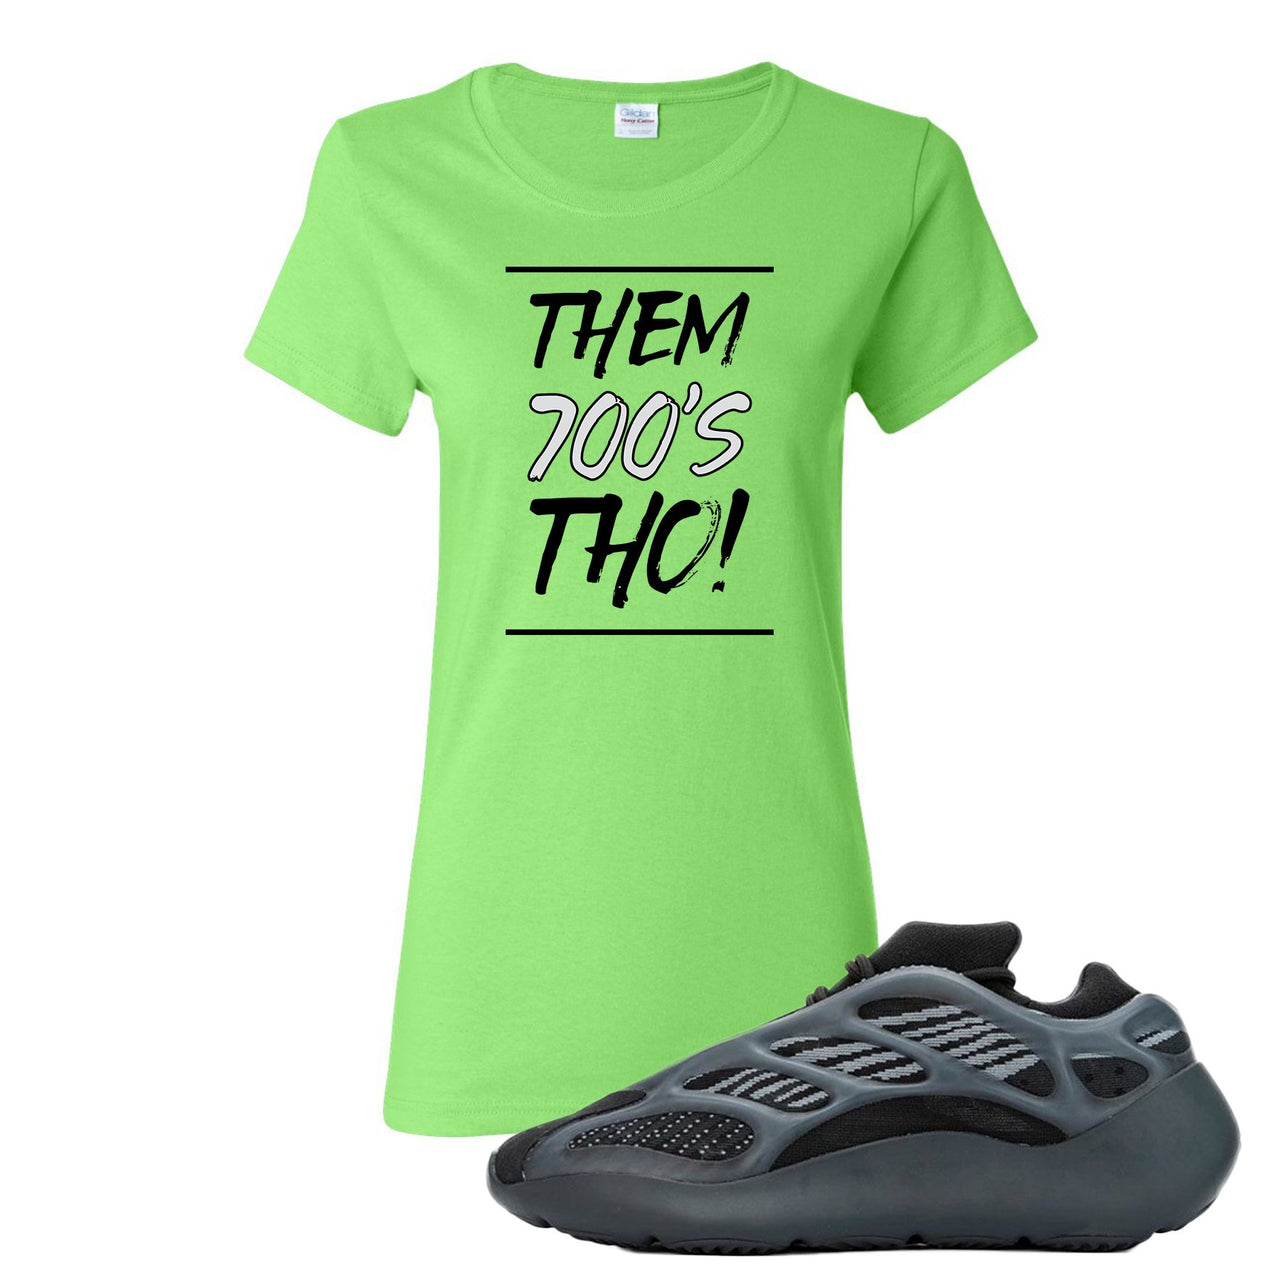 Alvah v3 700s Women's T Shirt | Women's Them 700's Tho!, Neon Green